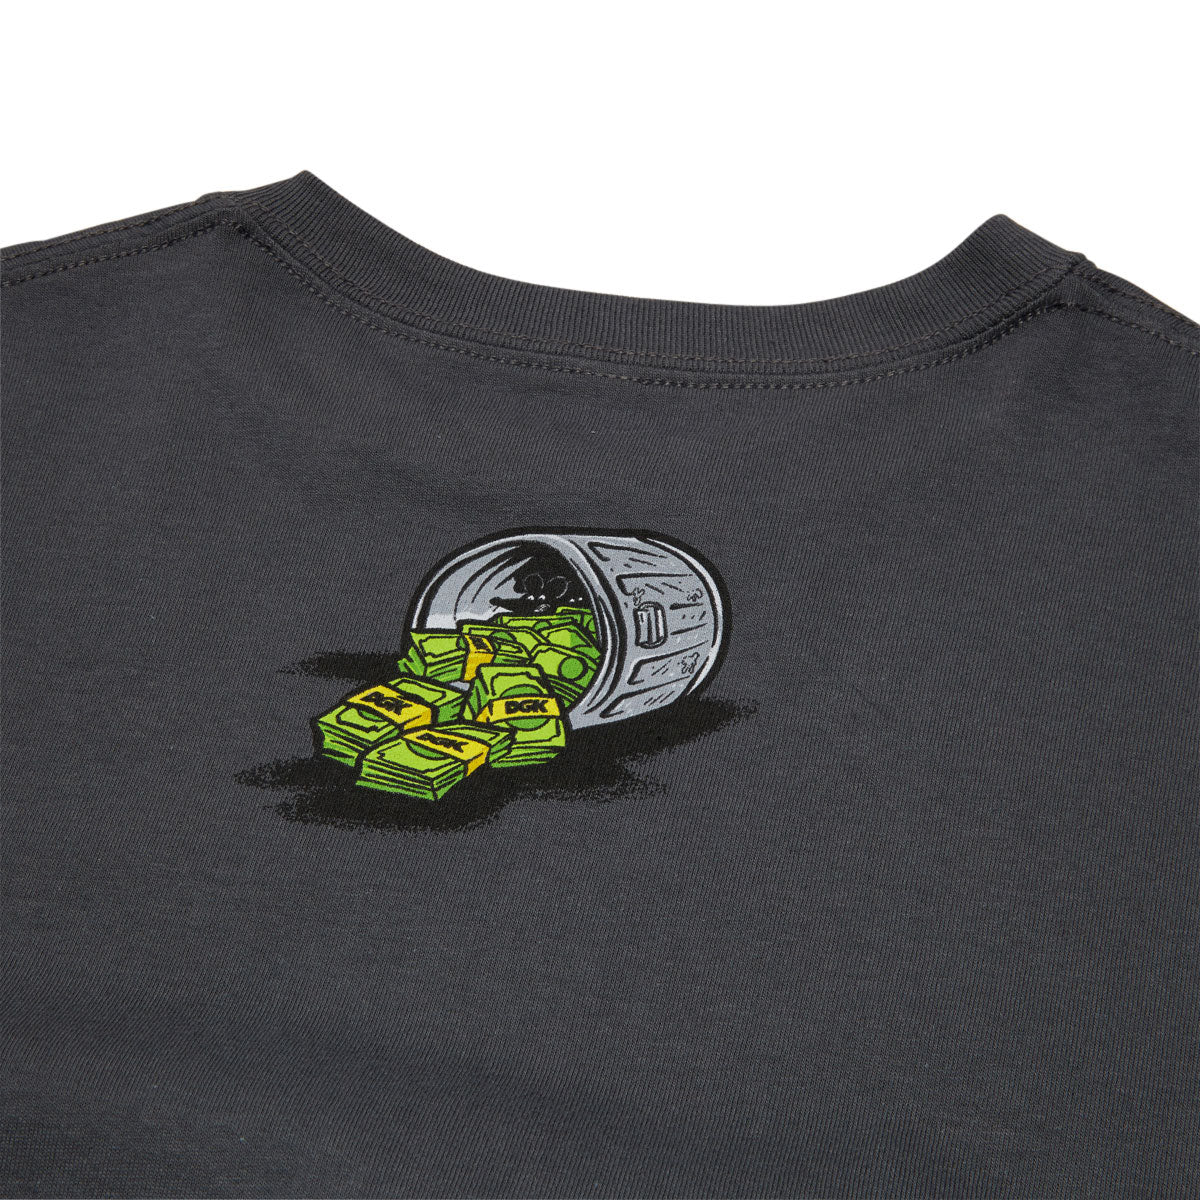 DGK Menace T-Shirt - Charcoal image 4